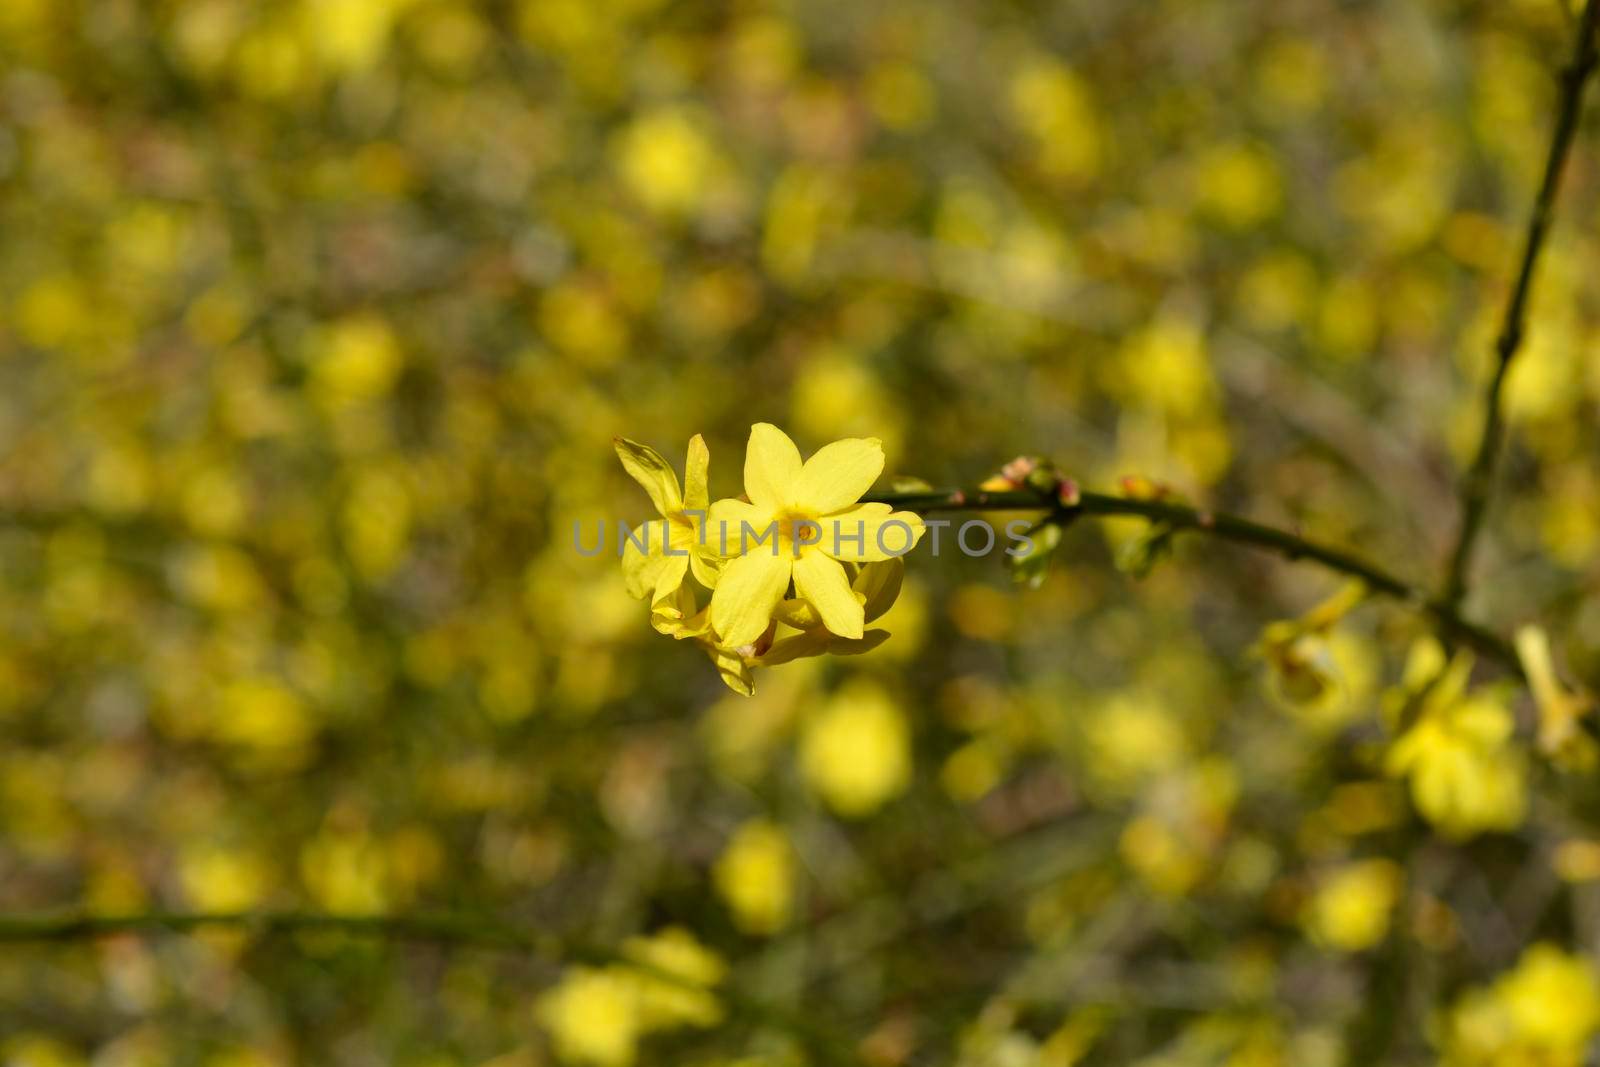 Winter jasmine - Latin name - Jasminum nudiflorum